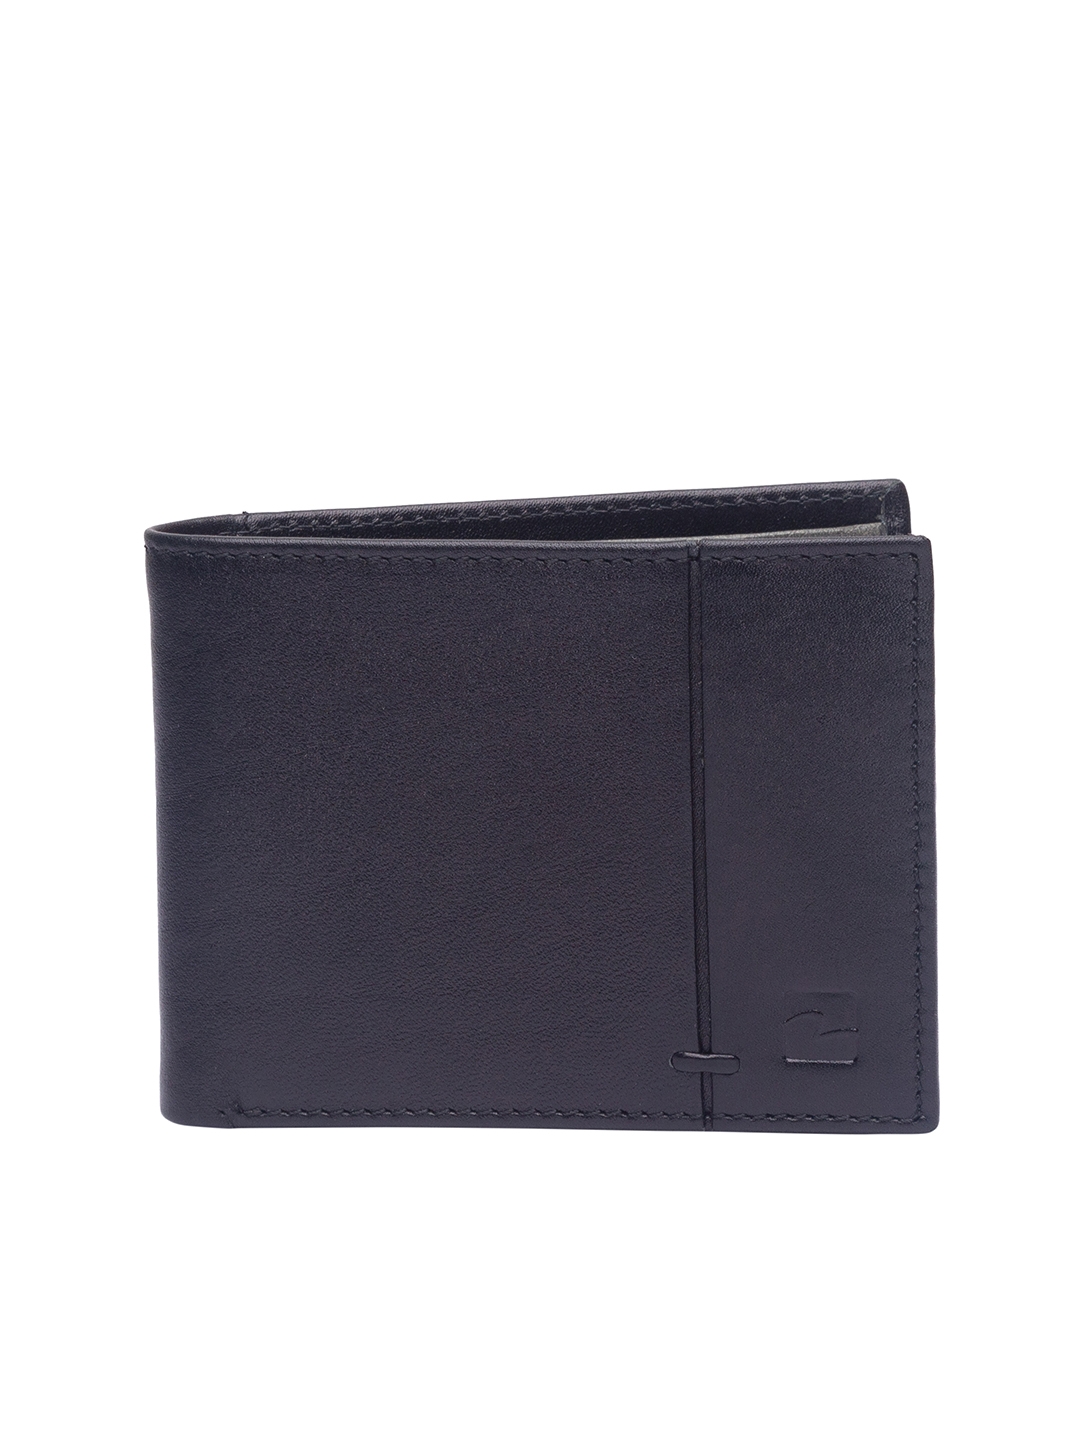 Spykar | Spykar Black Genuine Leather Wallet